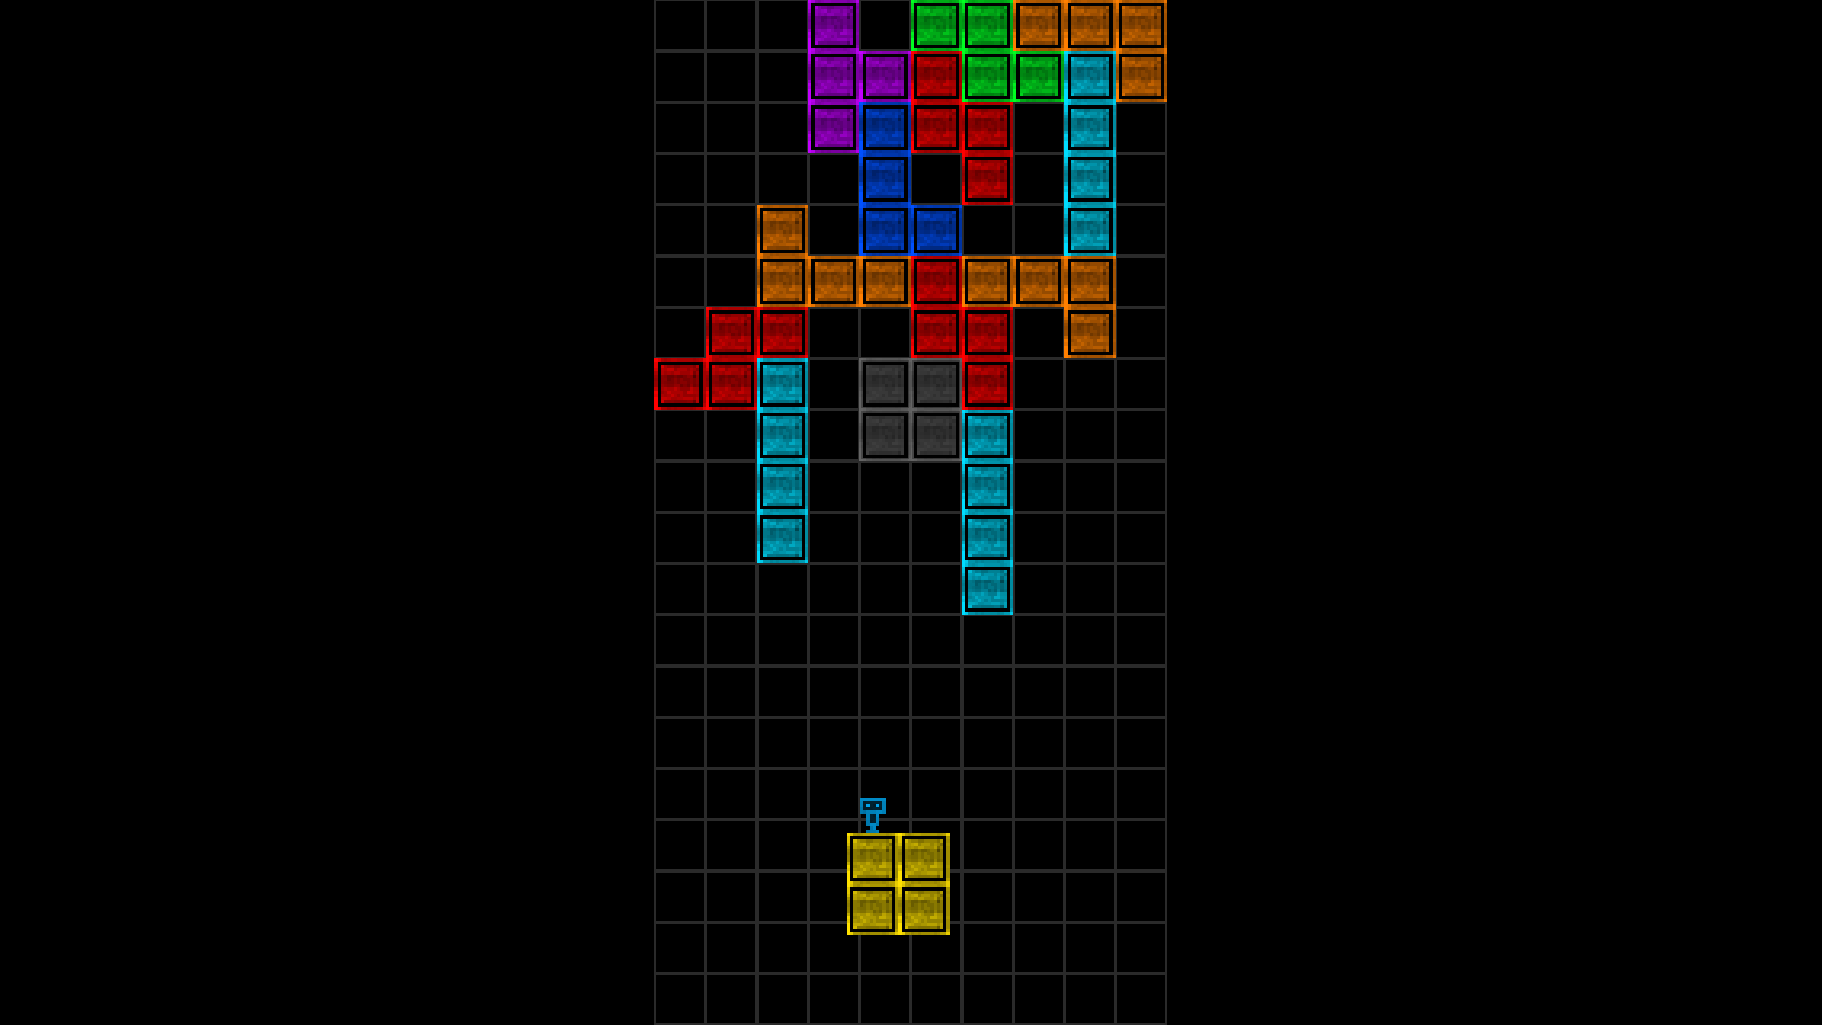 Gravitational Tetris